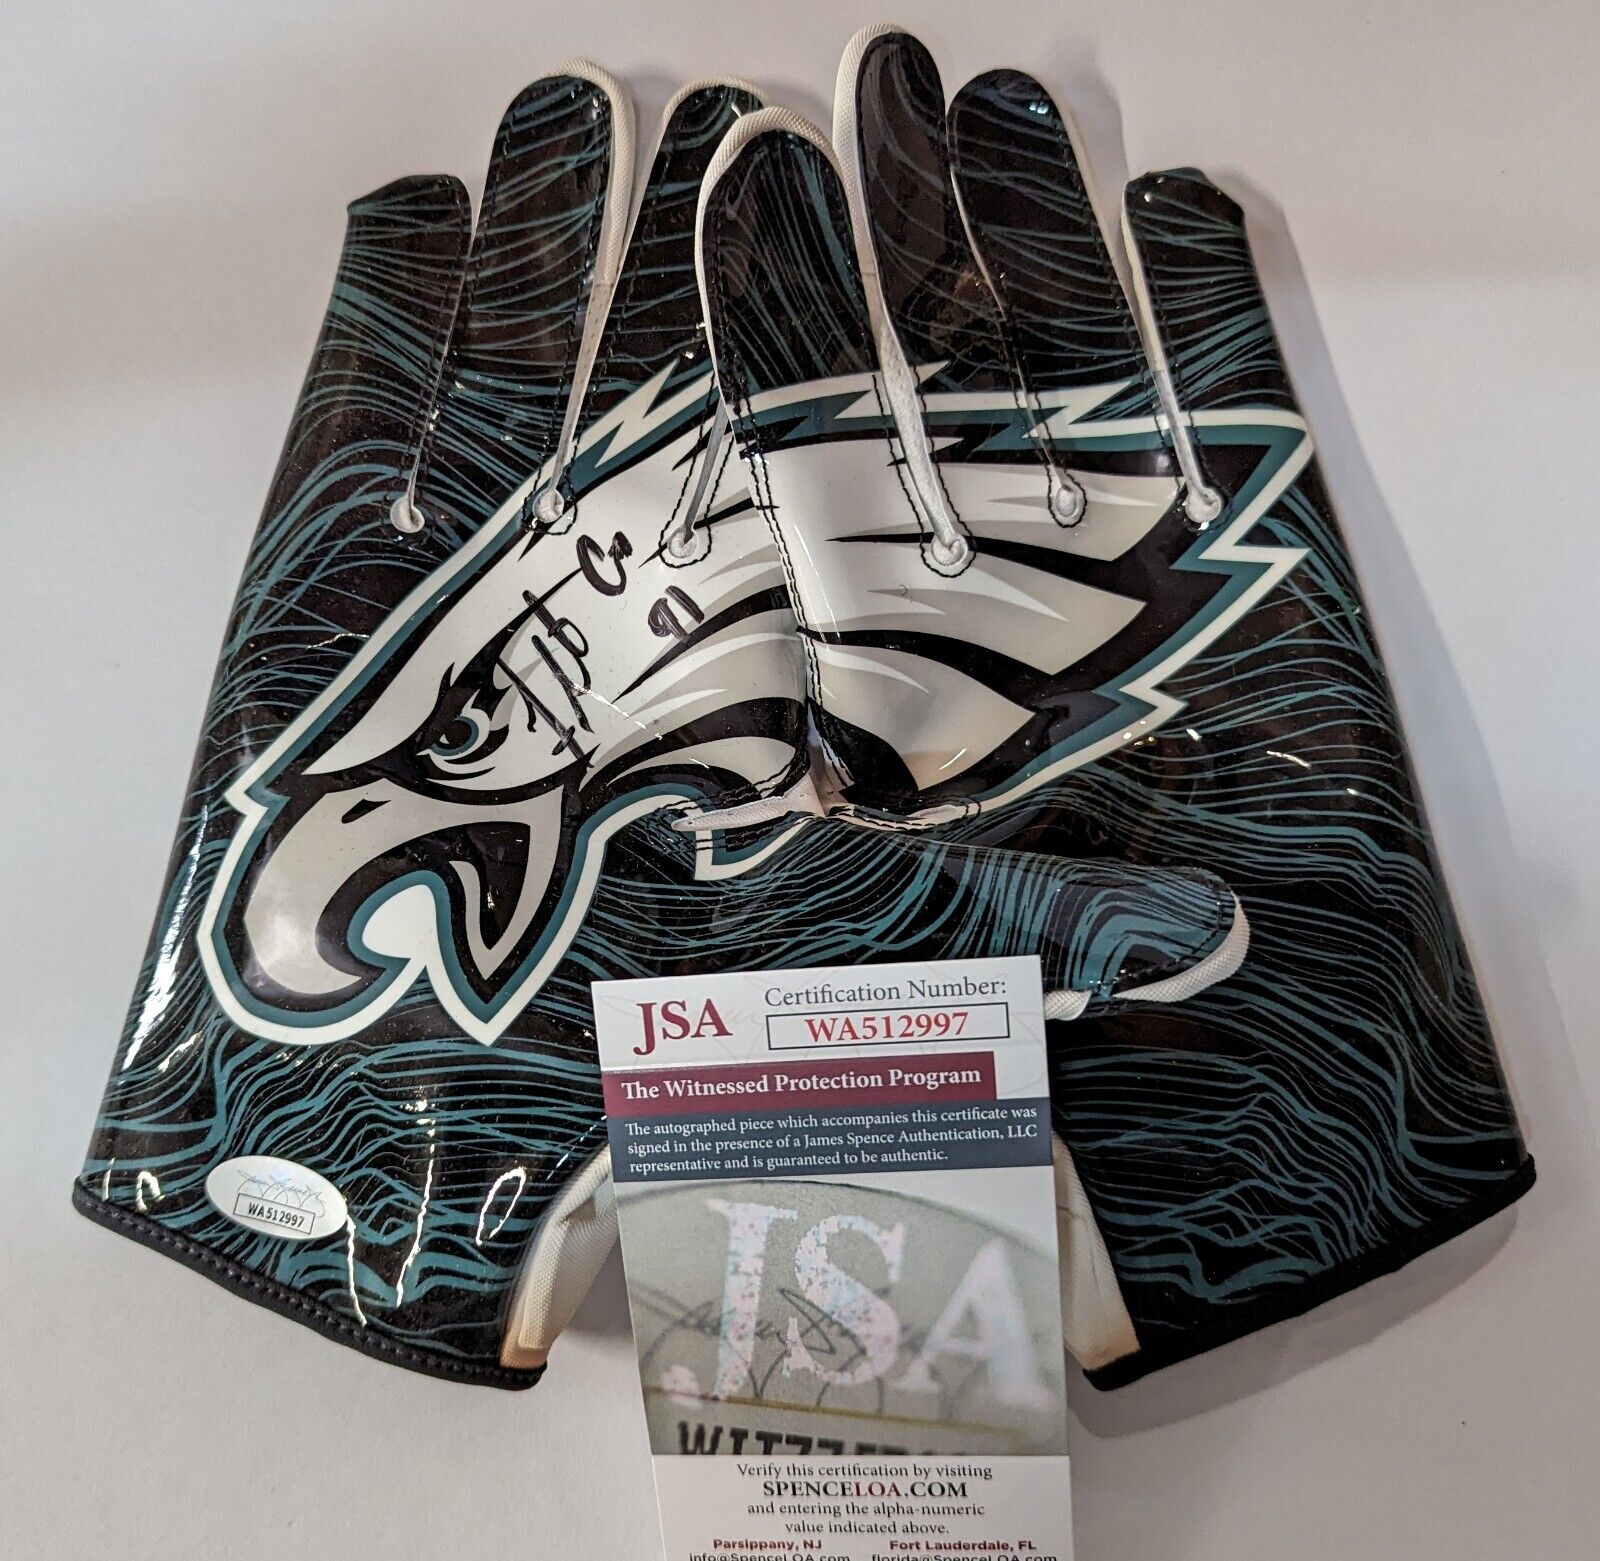 MVP Authentics Philadelphia Eagles Fletcher Cox Autographed Signed Pair Of Gloves Jsa Coa 157.50 sports jersey framing , jersey framing